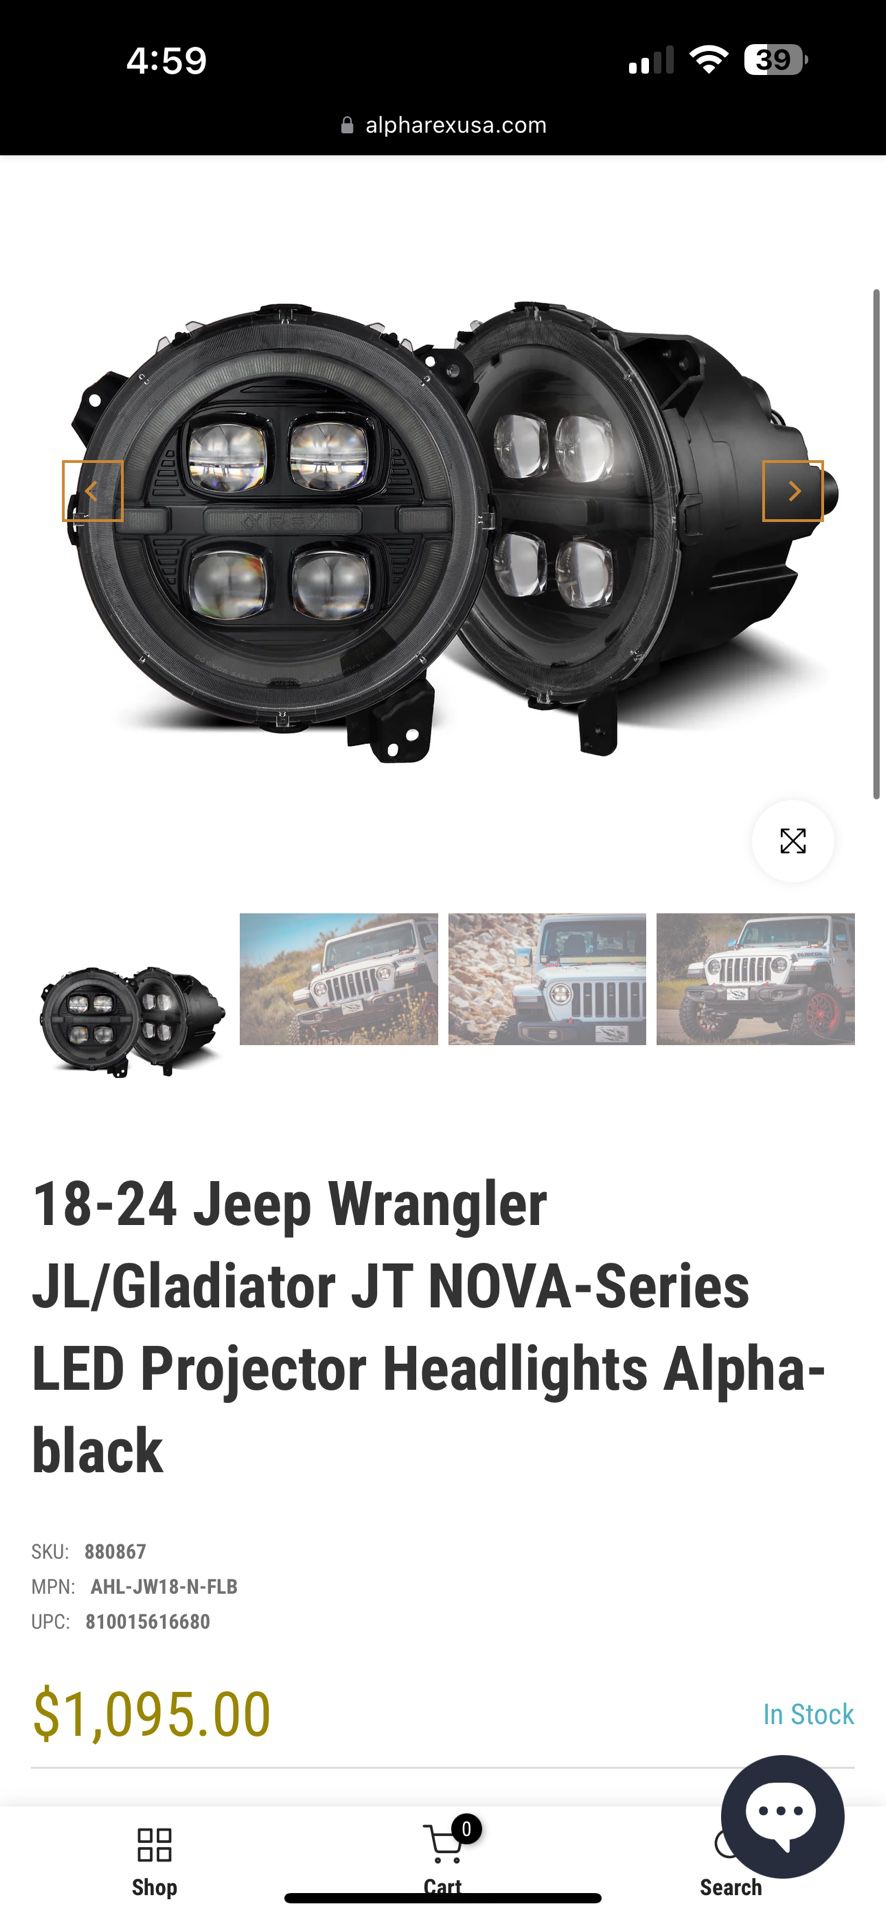 18-24 Jeep Wrangler JL/Gladiator JT NOVA-Series LED Projector Headlights Alpha-black